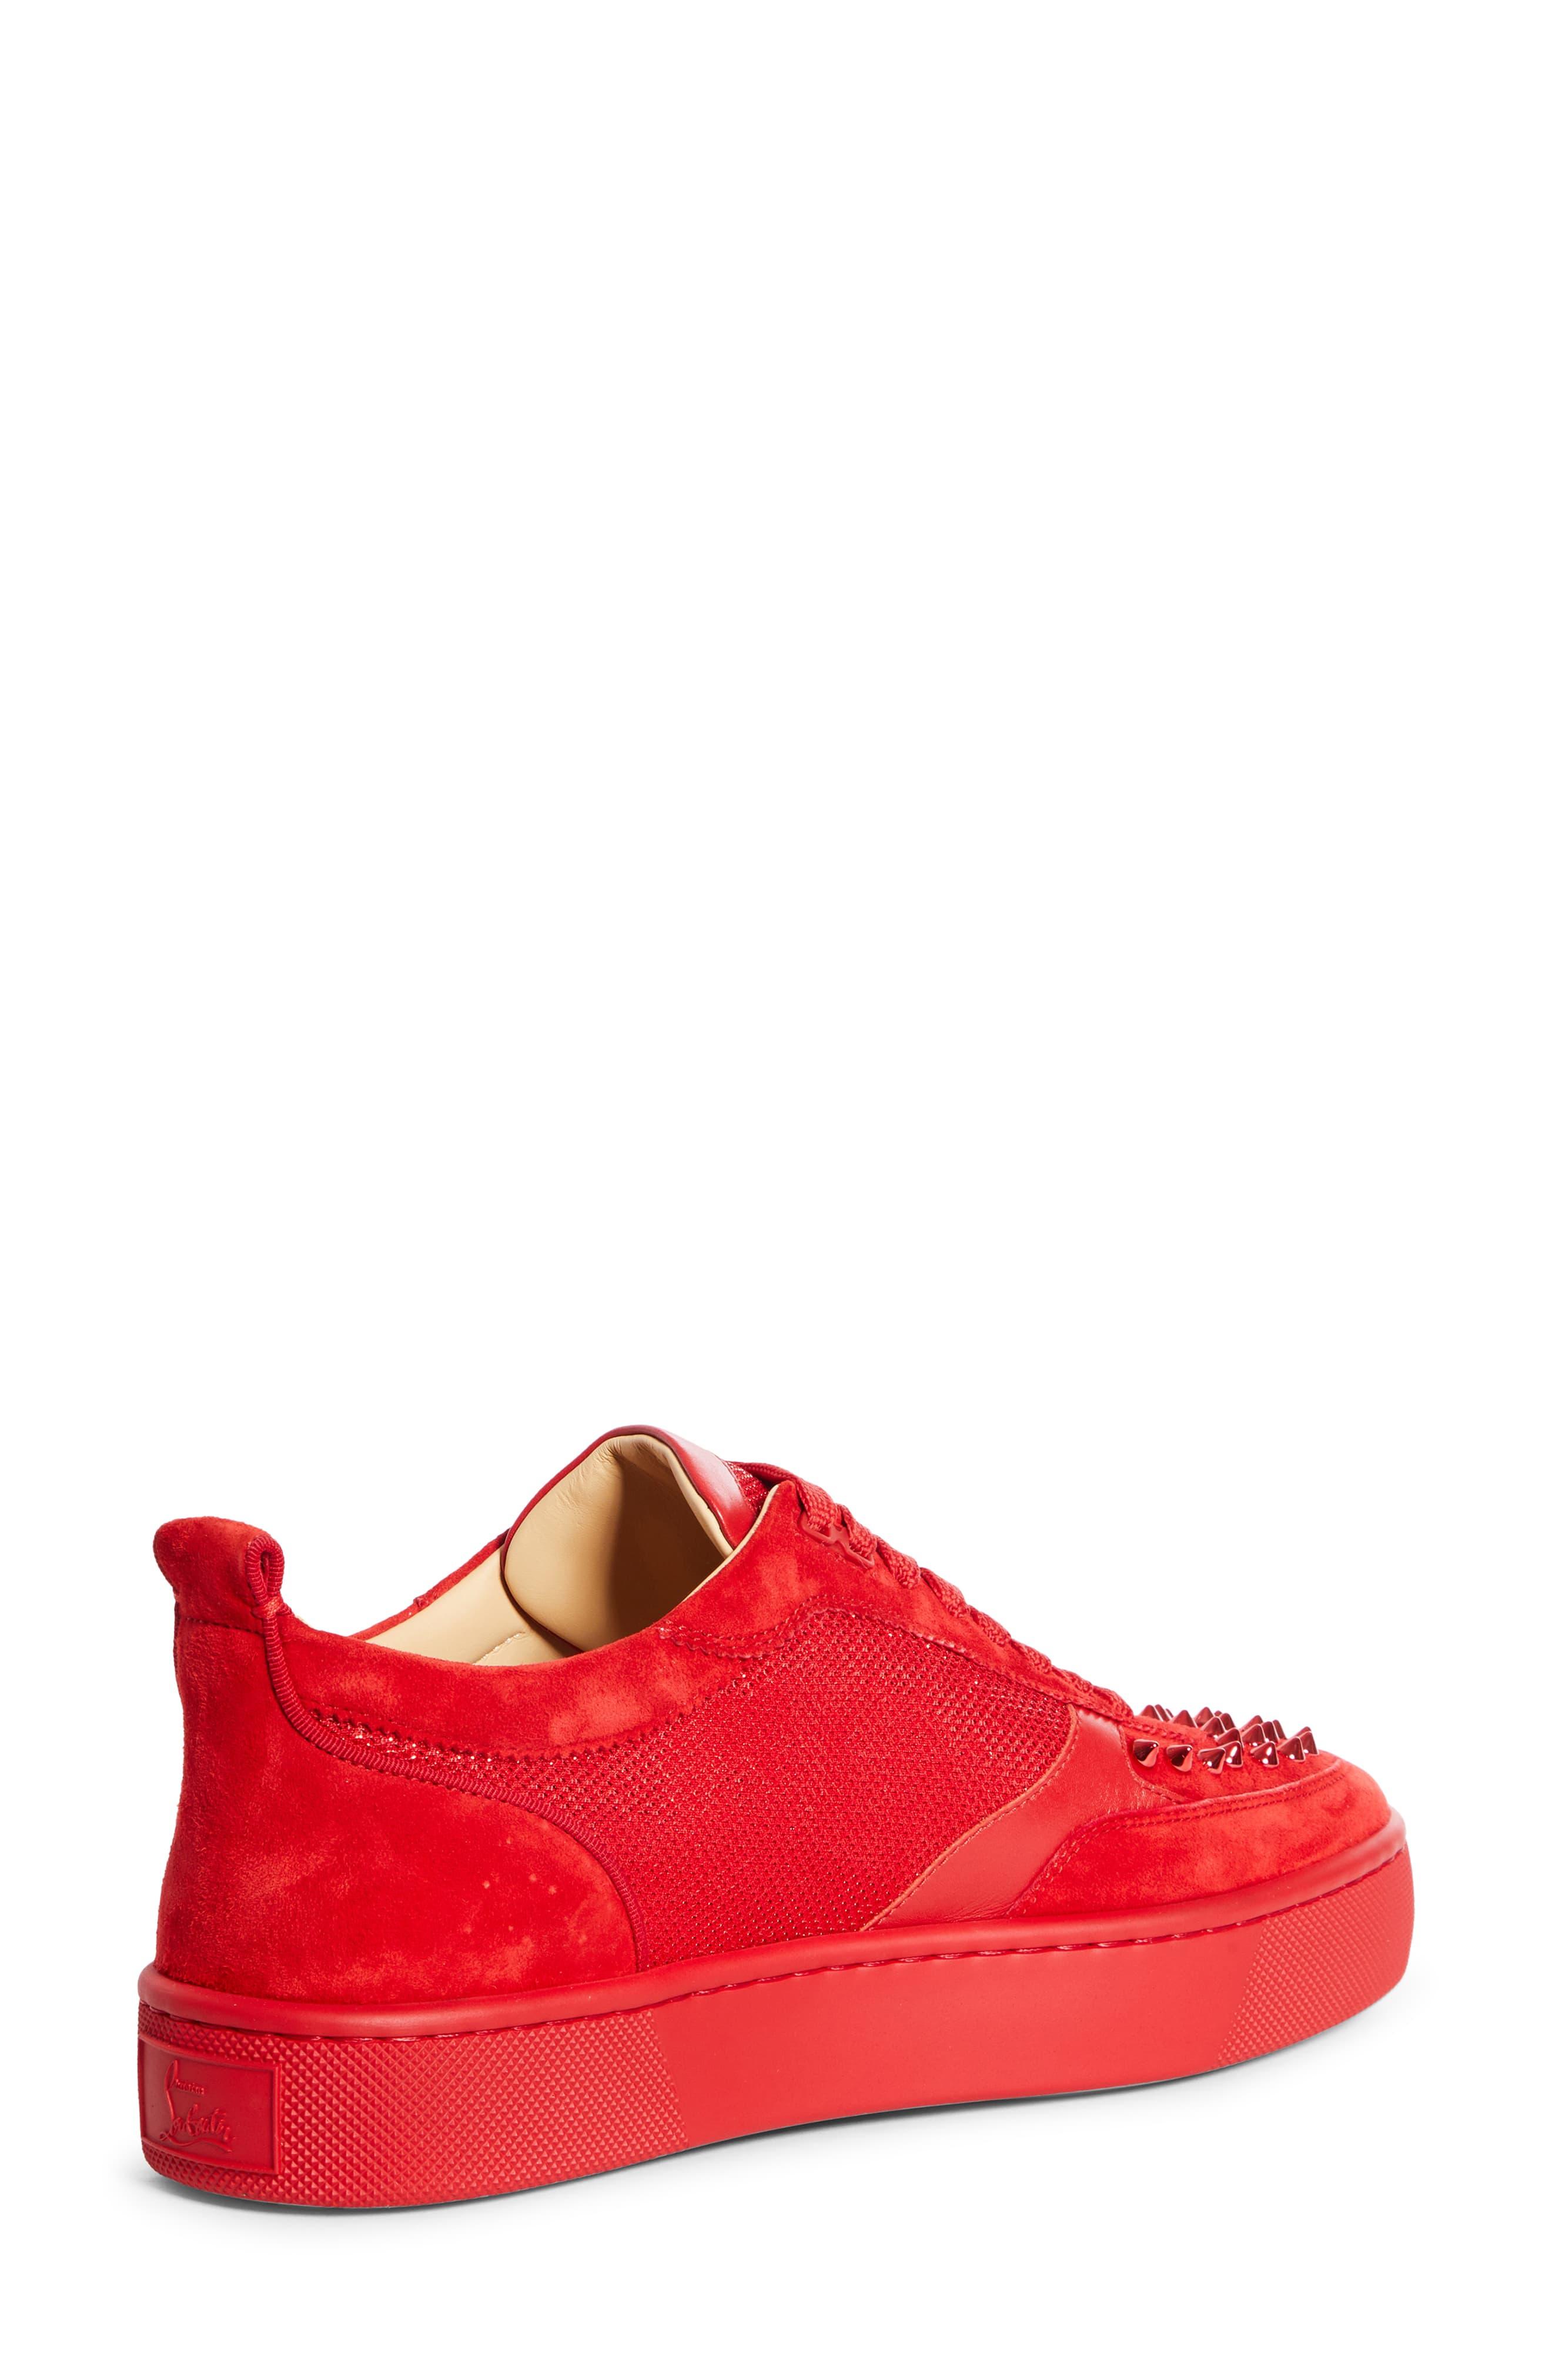 Christian Louboutin Men Coachelito Spikes Red Flat High Top Sneakers Size  44 | eBay